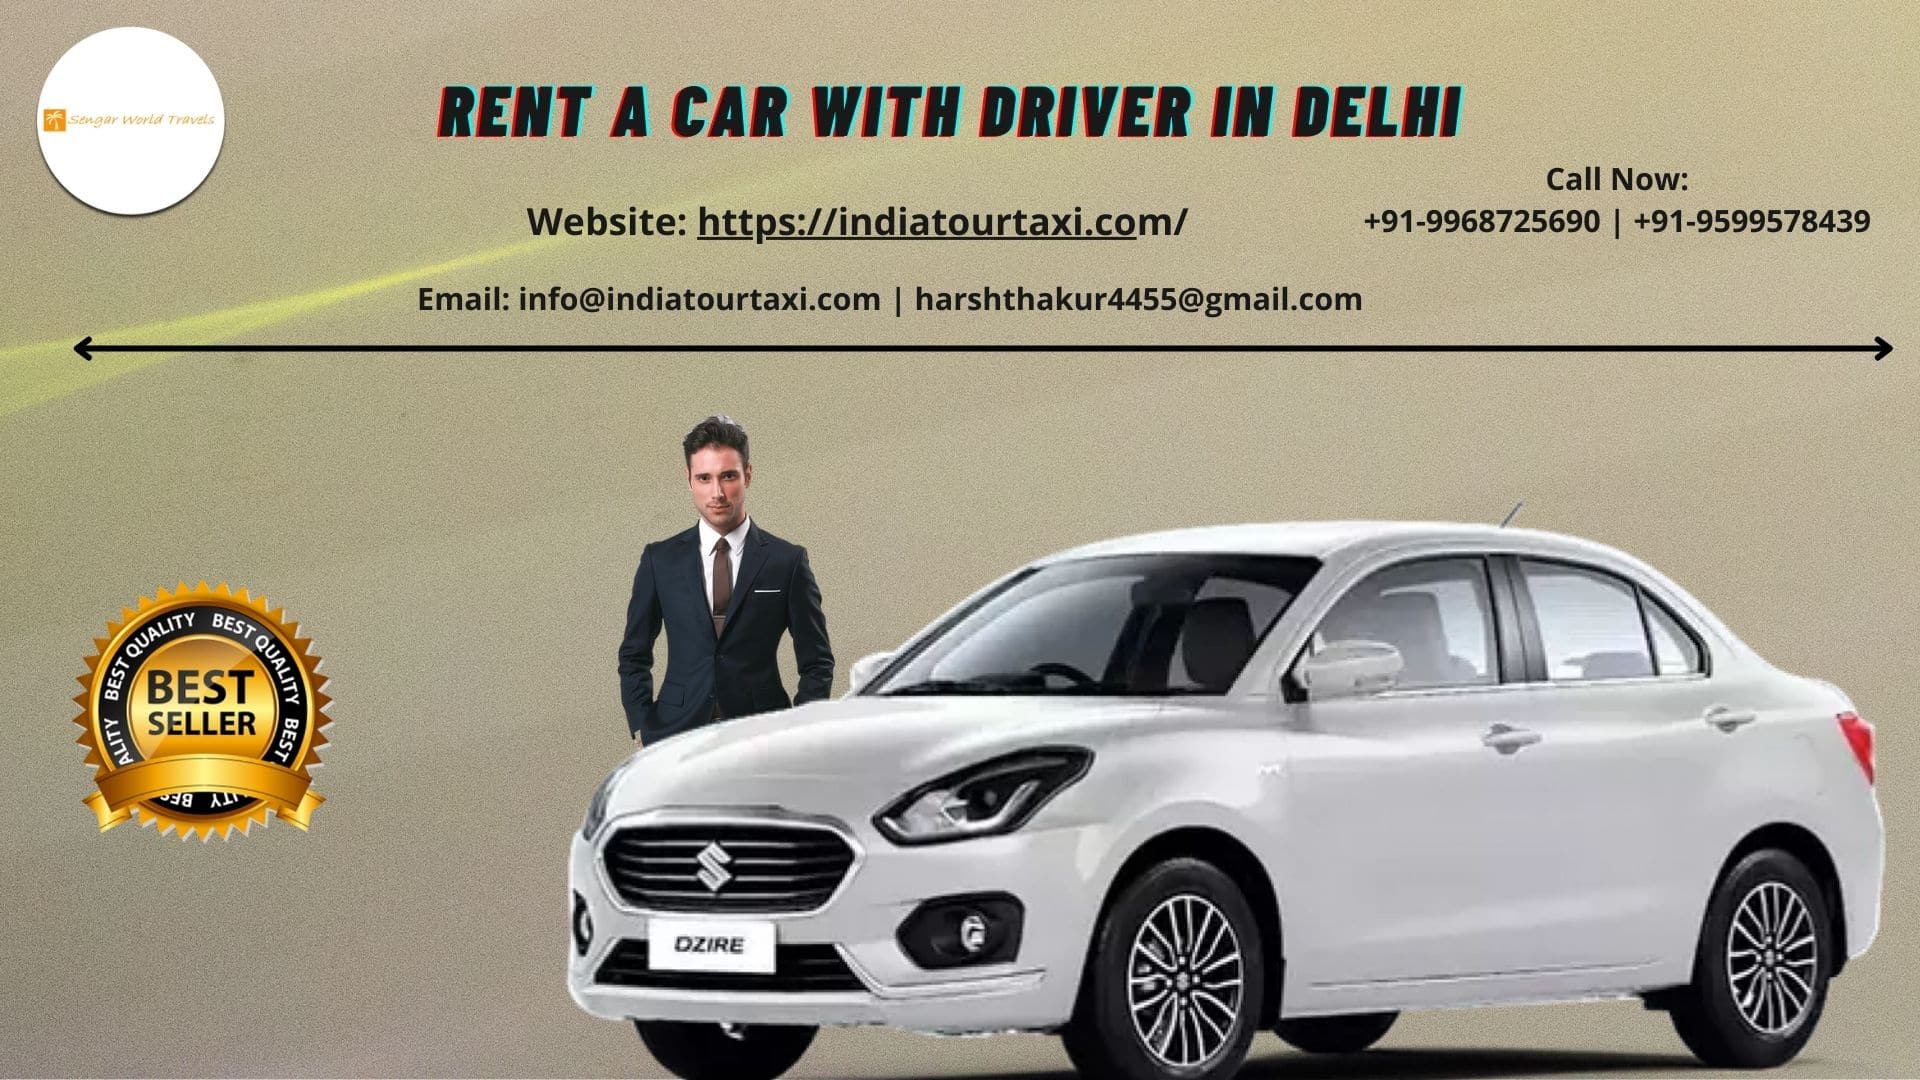 Rent a car with driver in delhi-7a6195e3